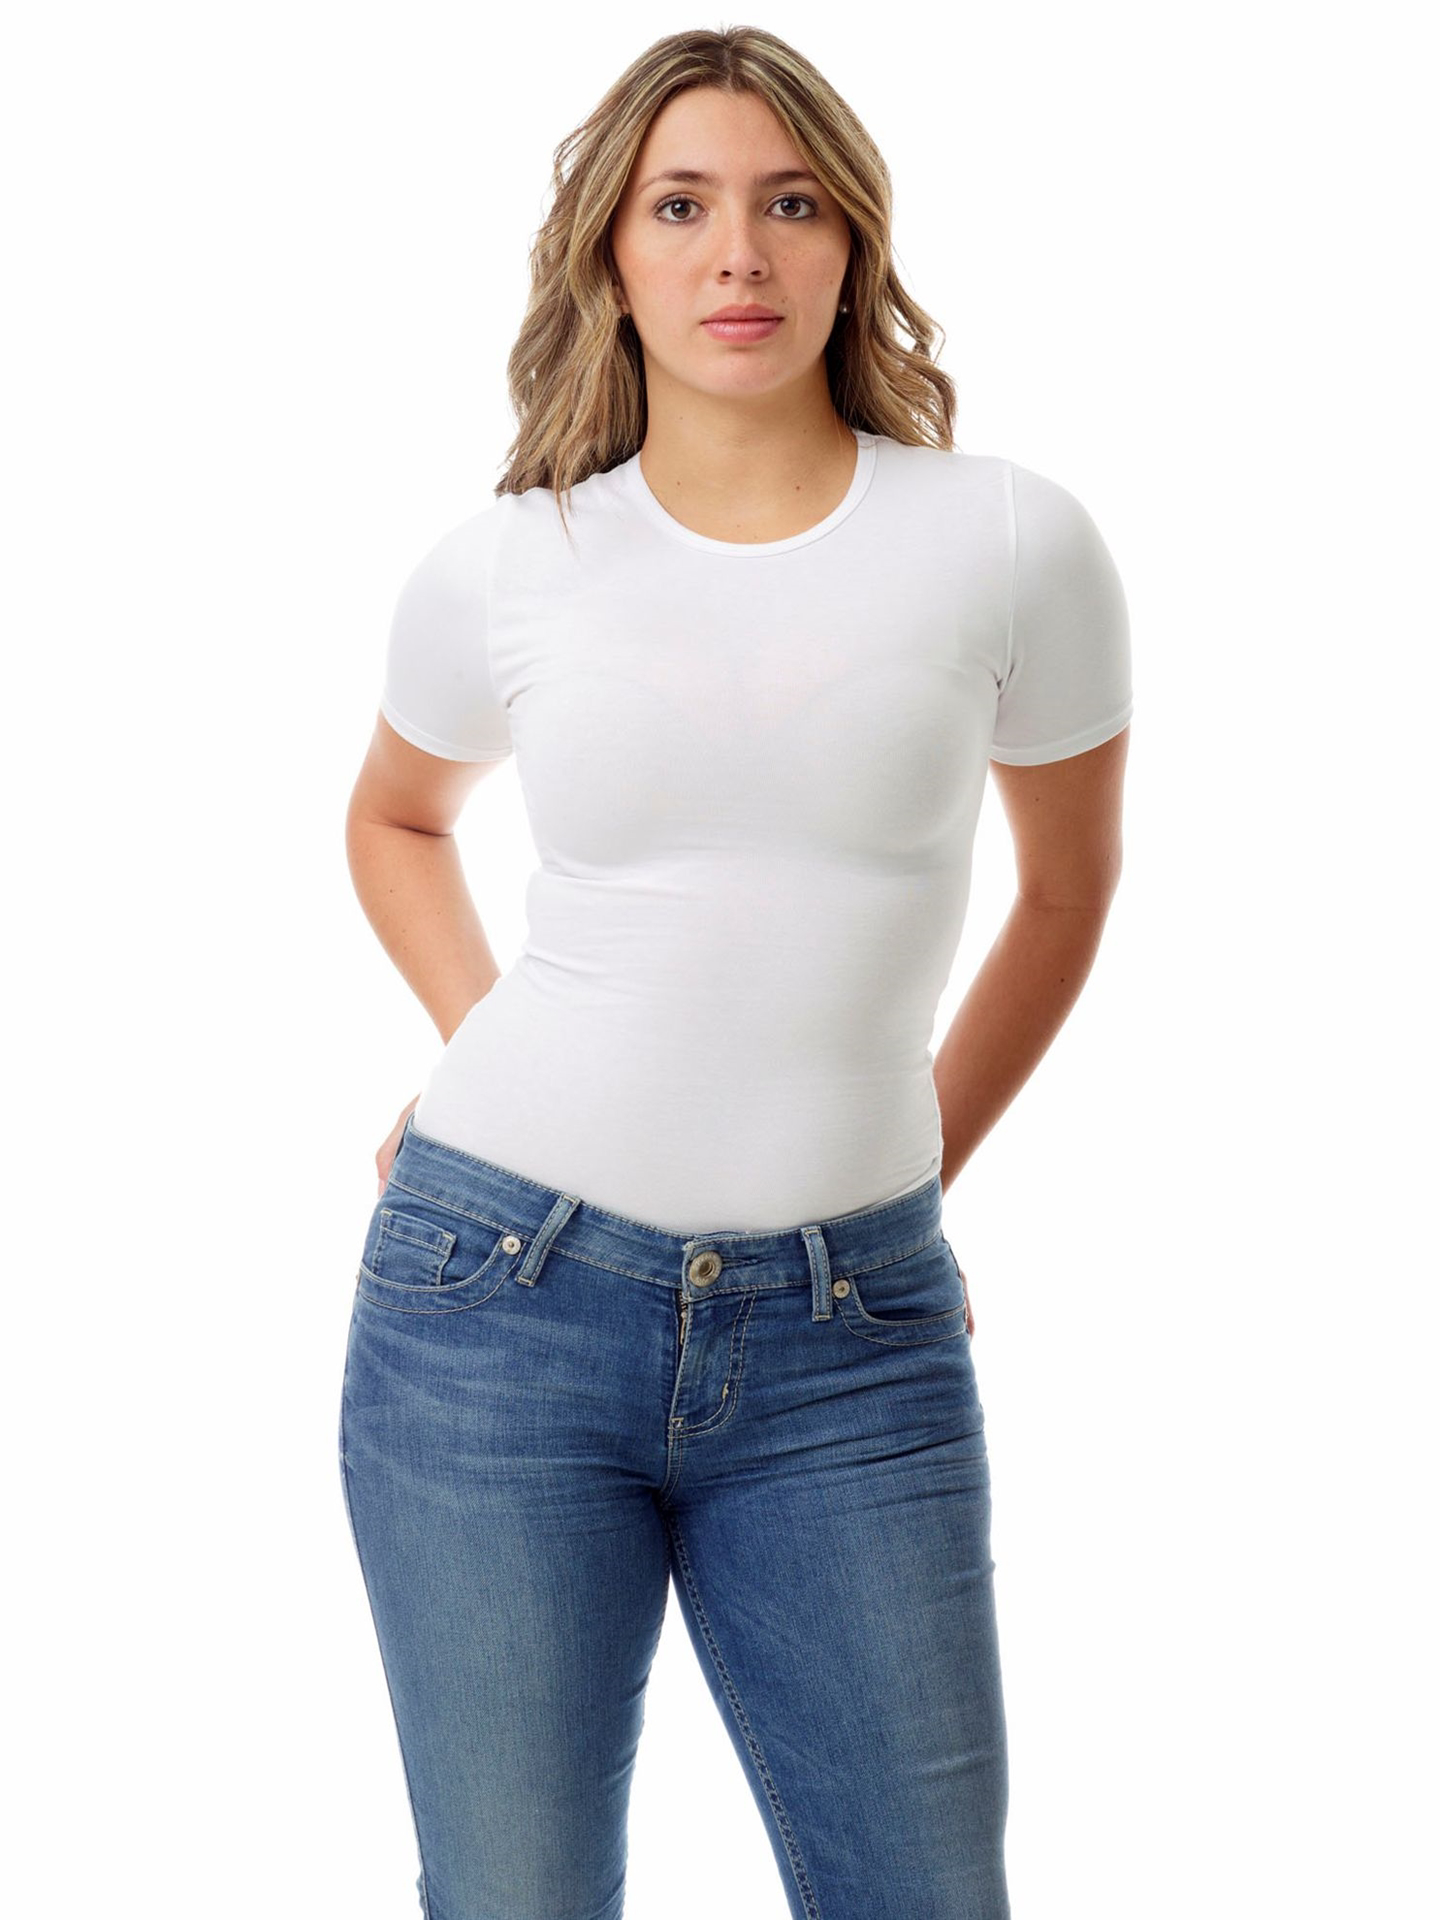 https://www.underworks.com/images/thumbs/0000281_womens-ultra-light-cotton-spandex-compression-crew-neck-t-shirt.jpeg